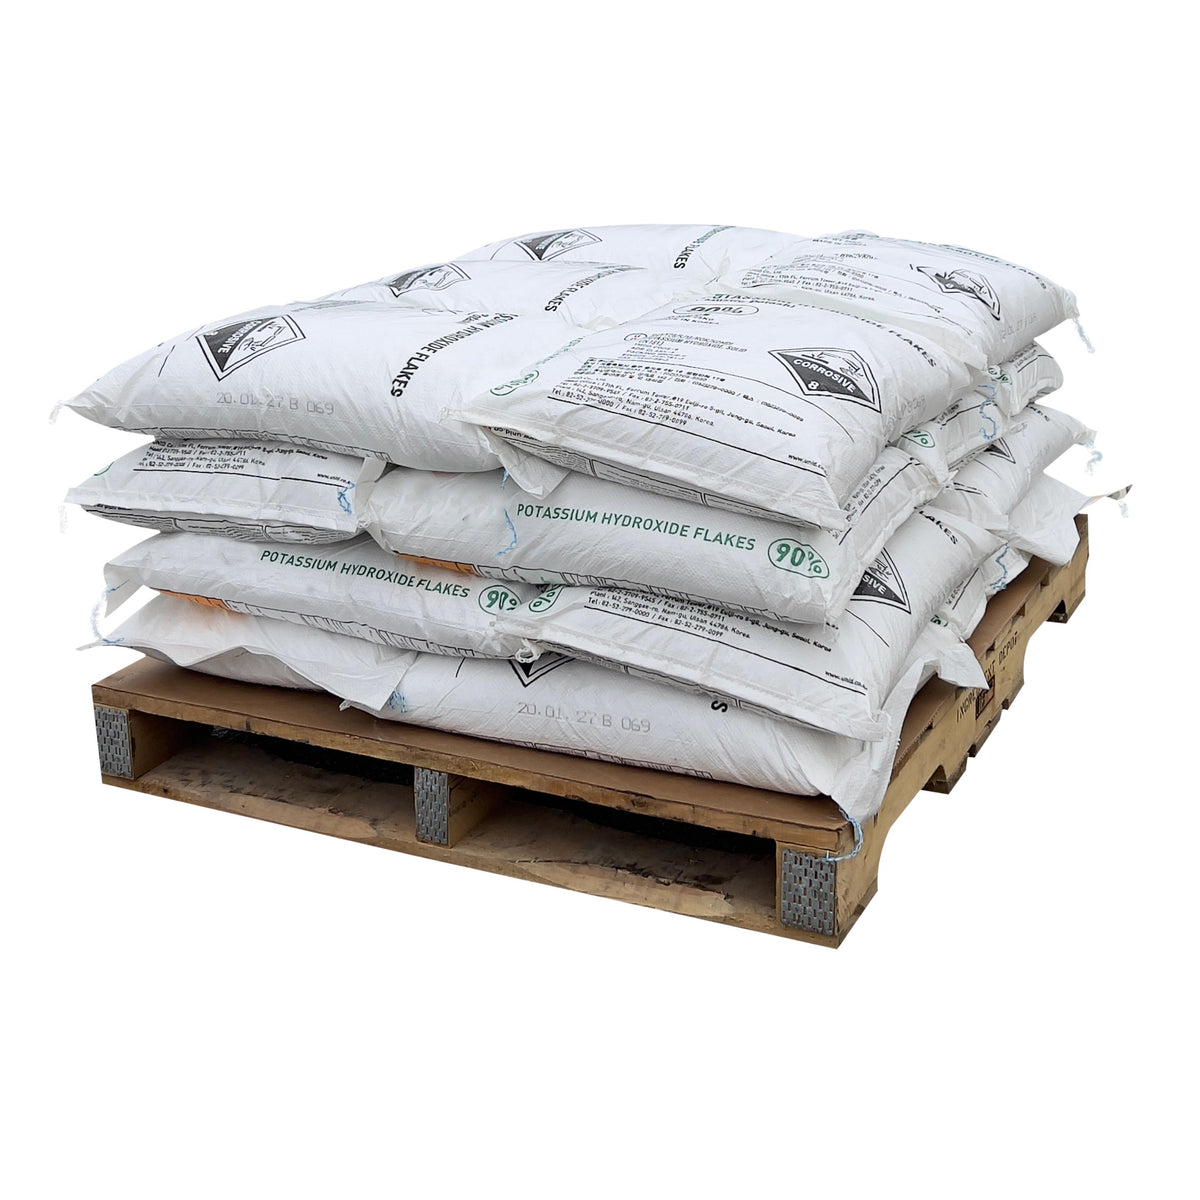 Ingredient Depot Potassium Hydroxide 1000 lbs 20 Bags on Pallet